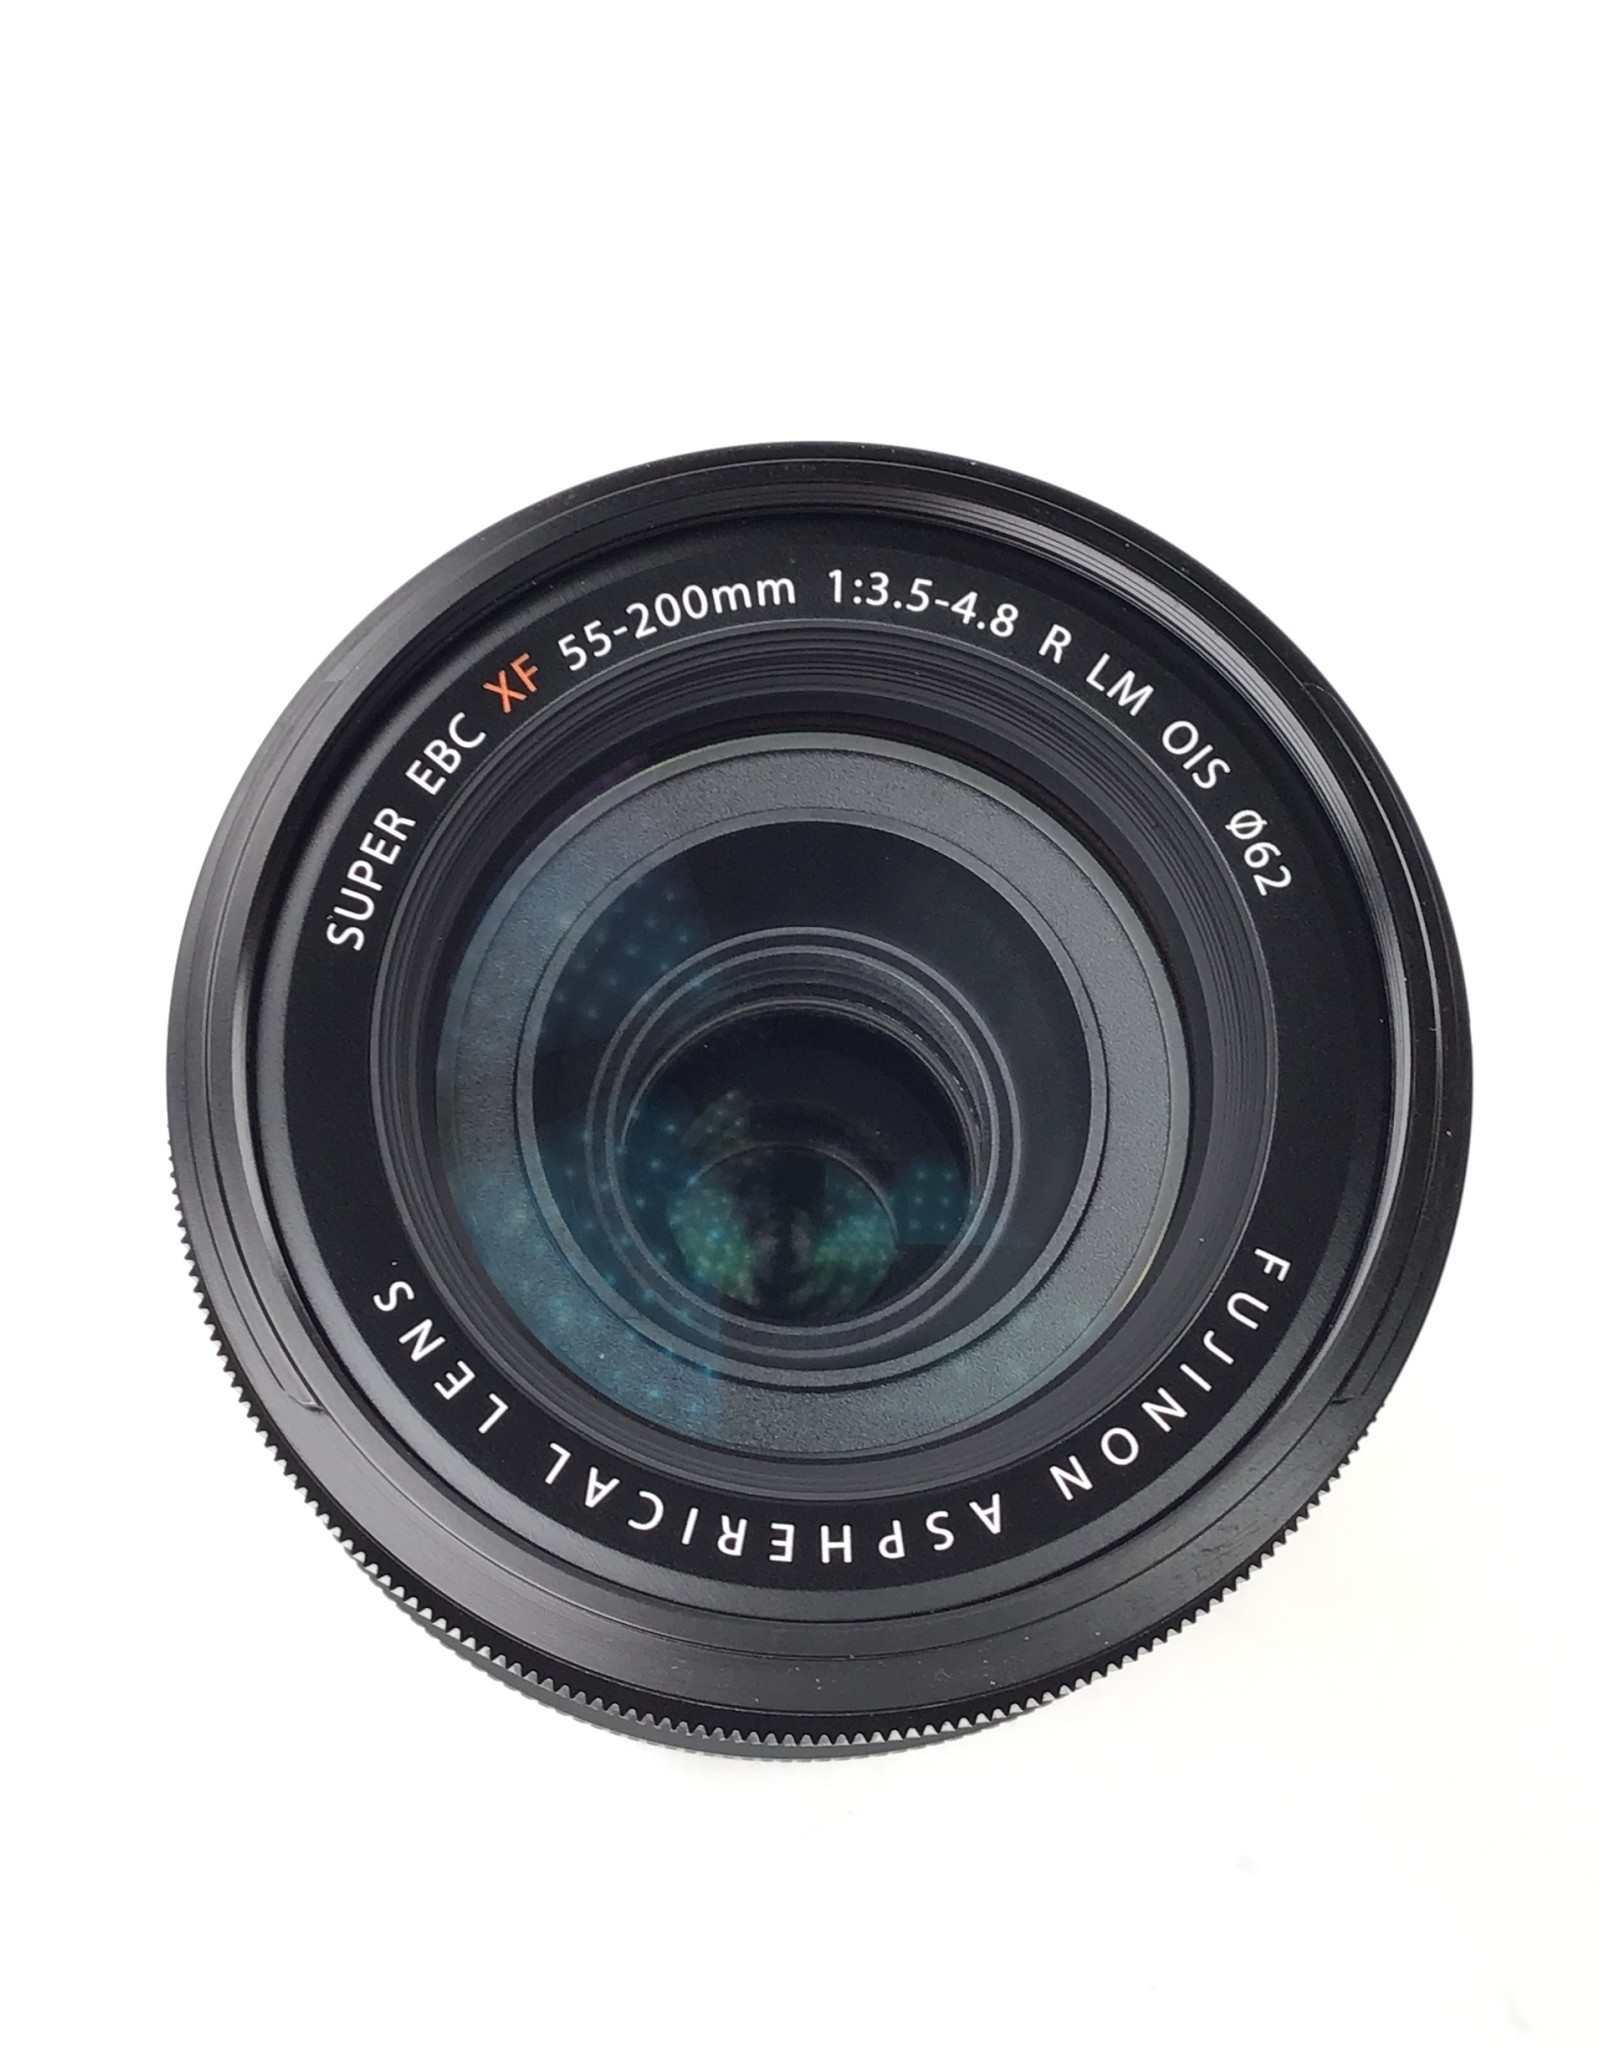 FUJI Fuji Fujifilm Super EBC XF 55-200mm f3.5-4.8 R LM OIS Lens Used Good